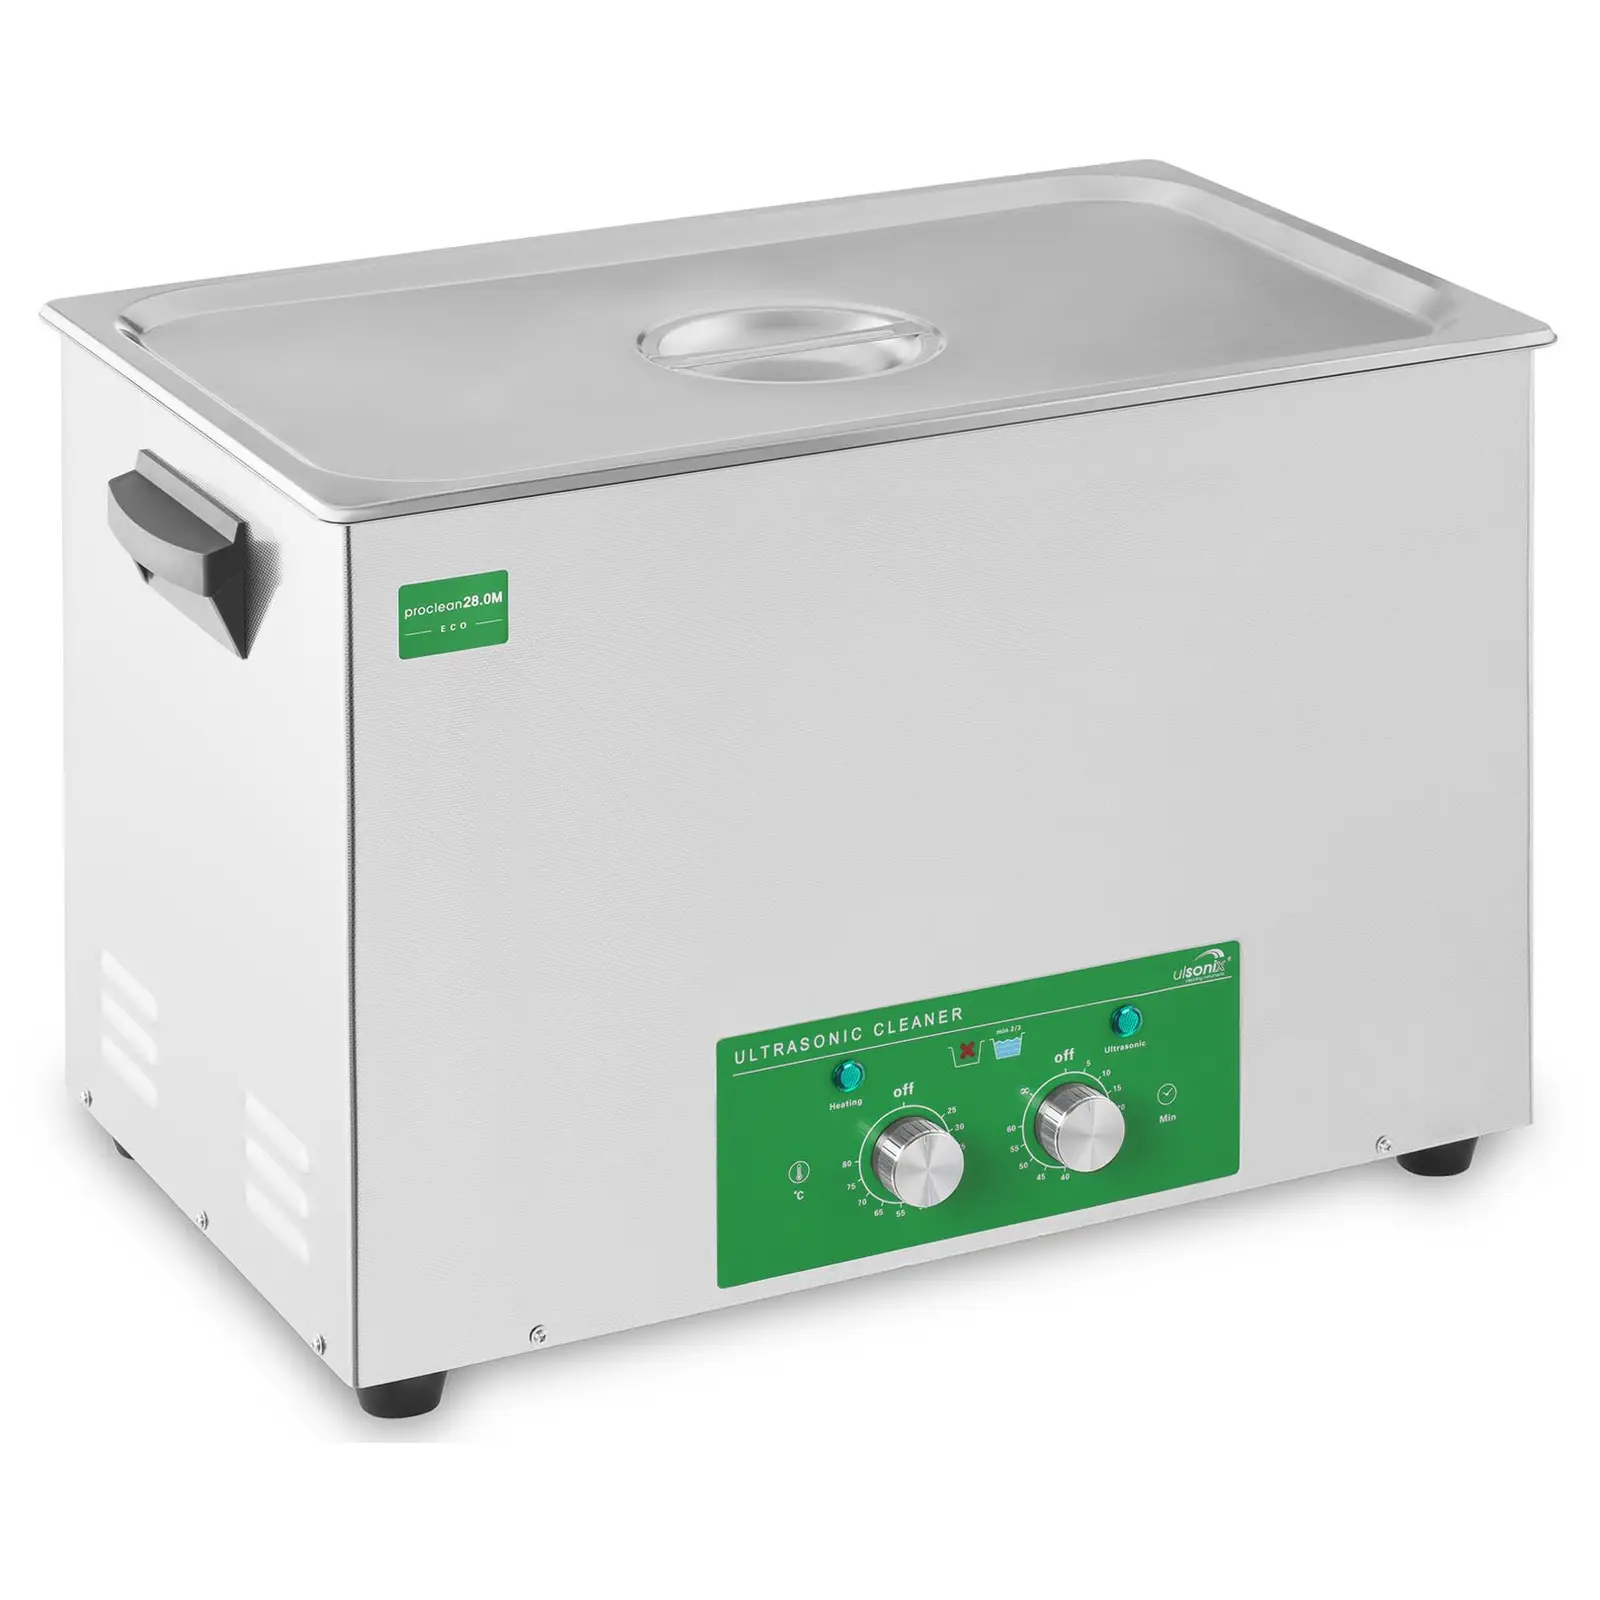 Nettoyeur ultrason - 28 litres - 480 watts - Basic Eco